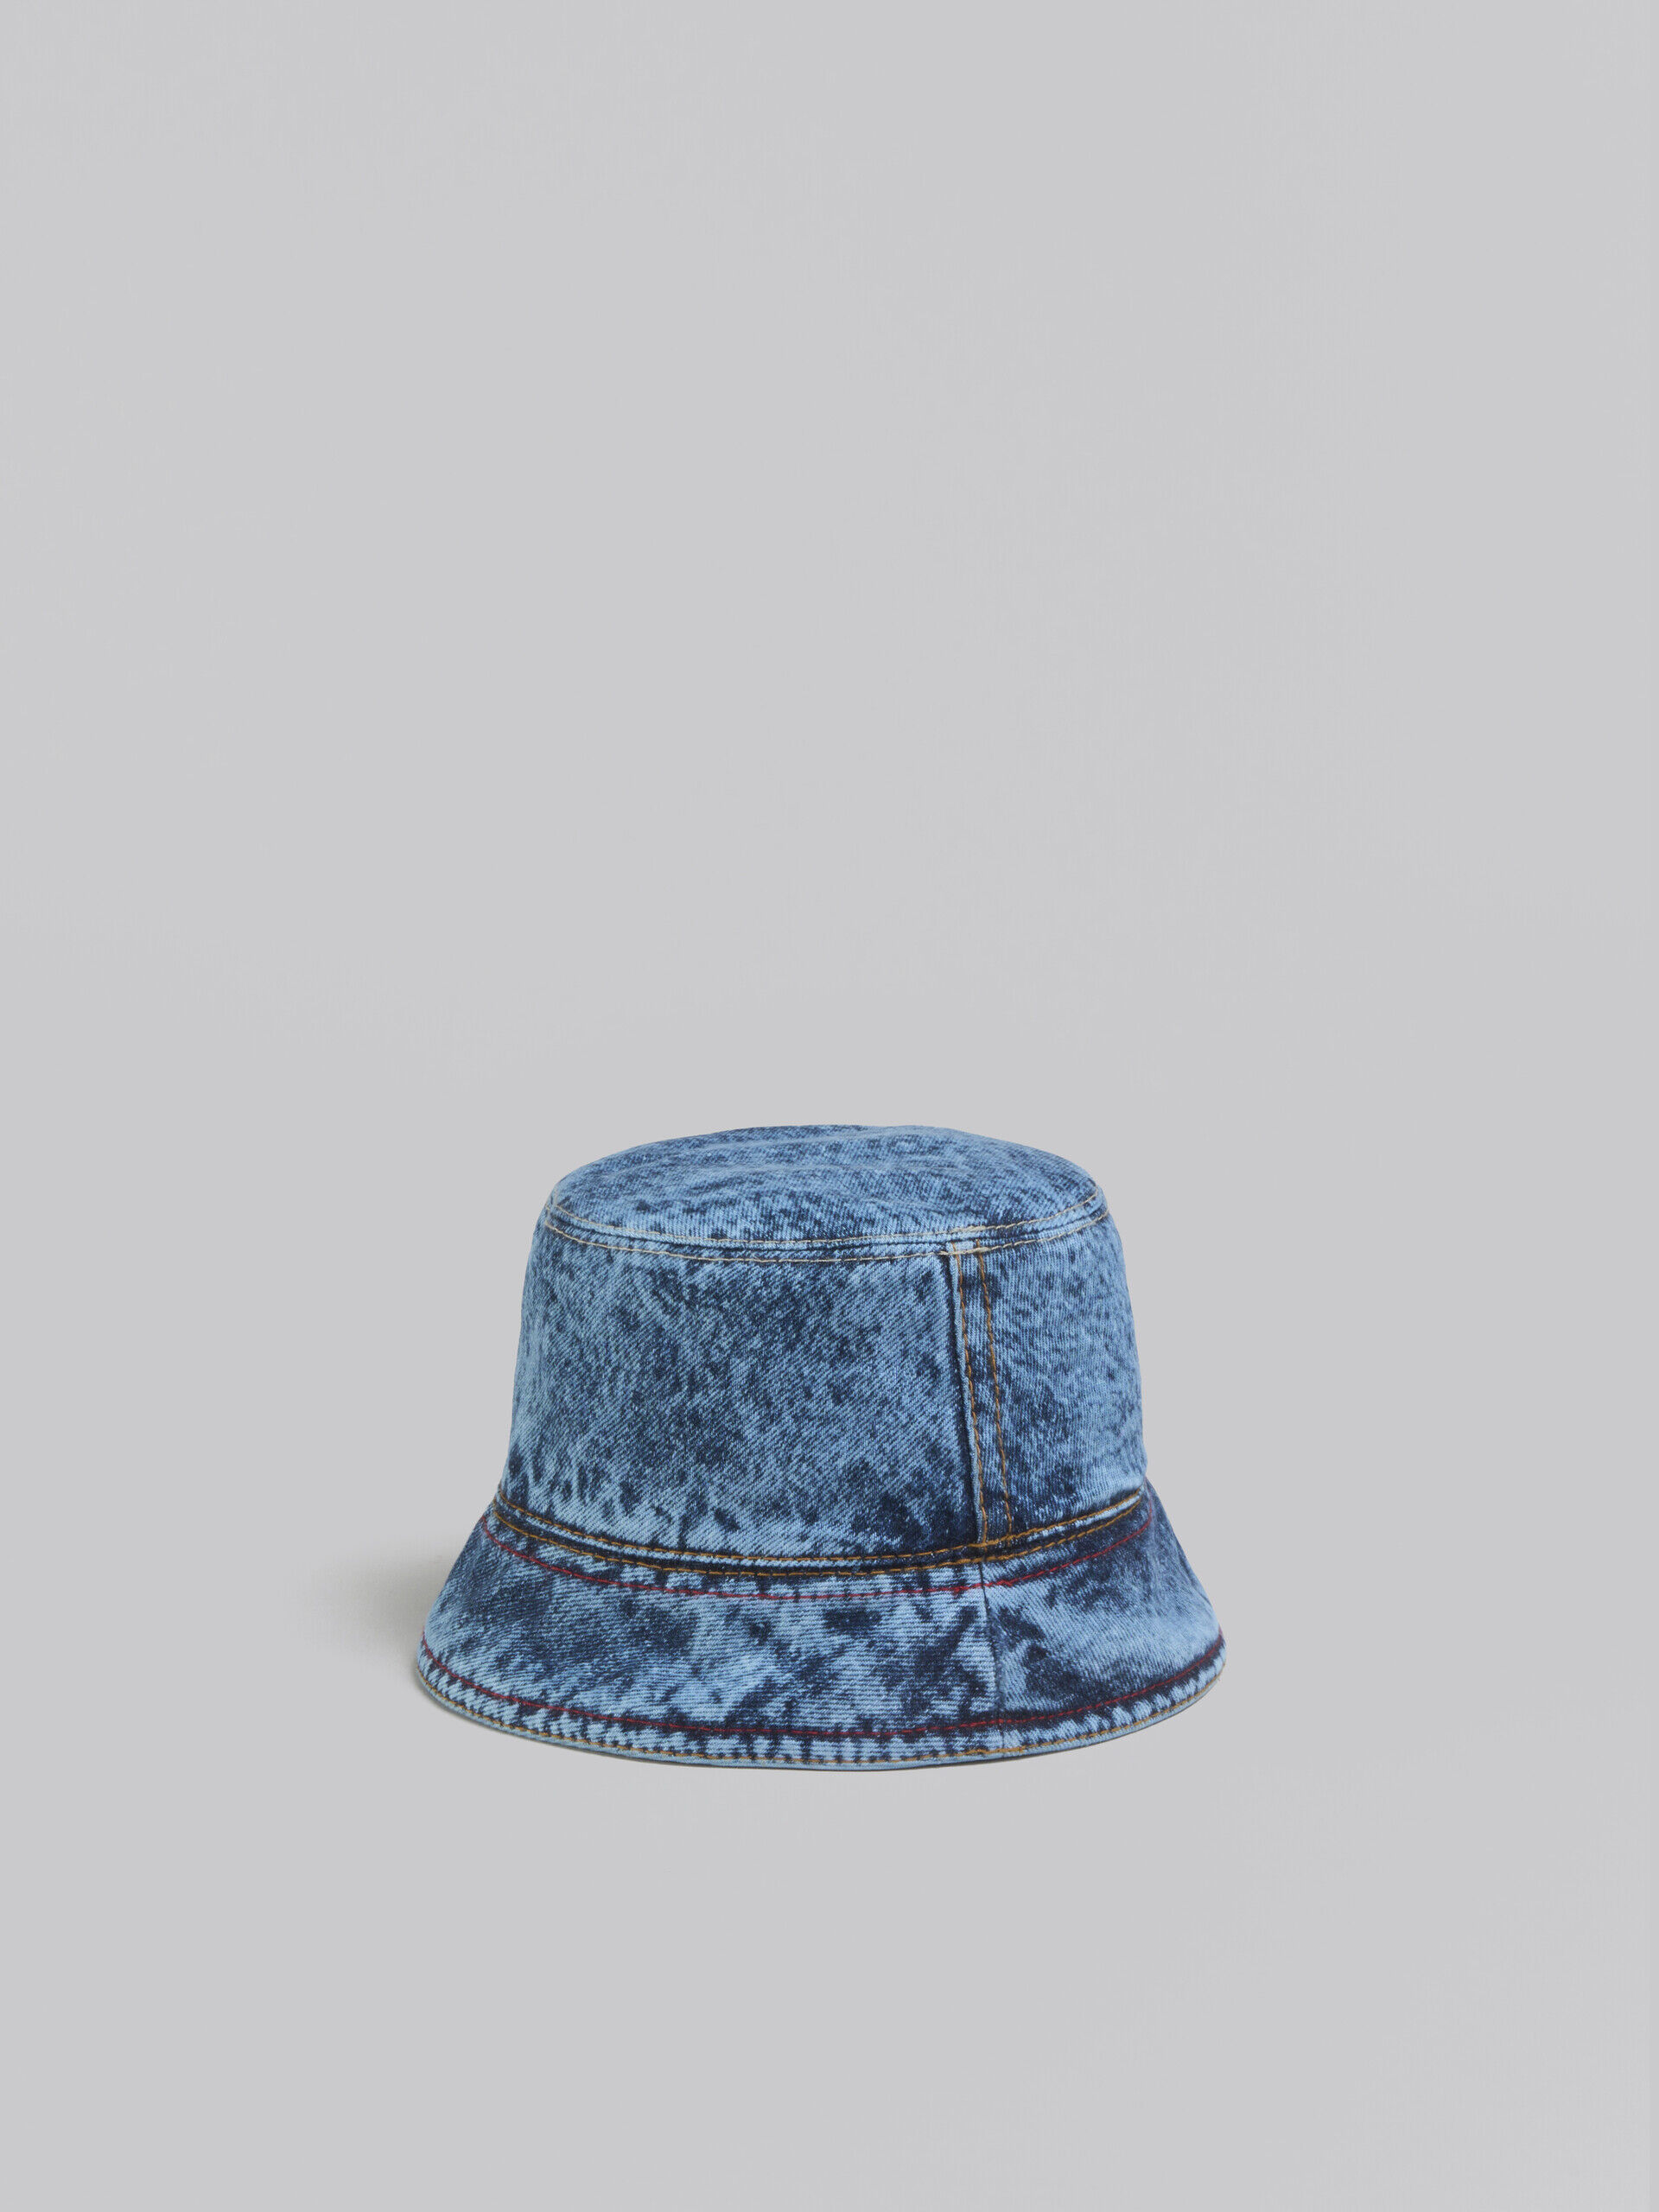 Blue denim bucket hat with marble-dyed finish | Marni